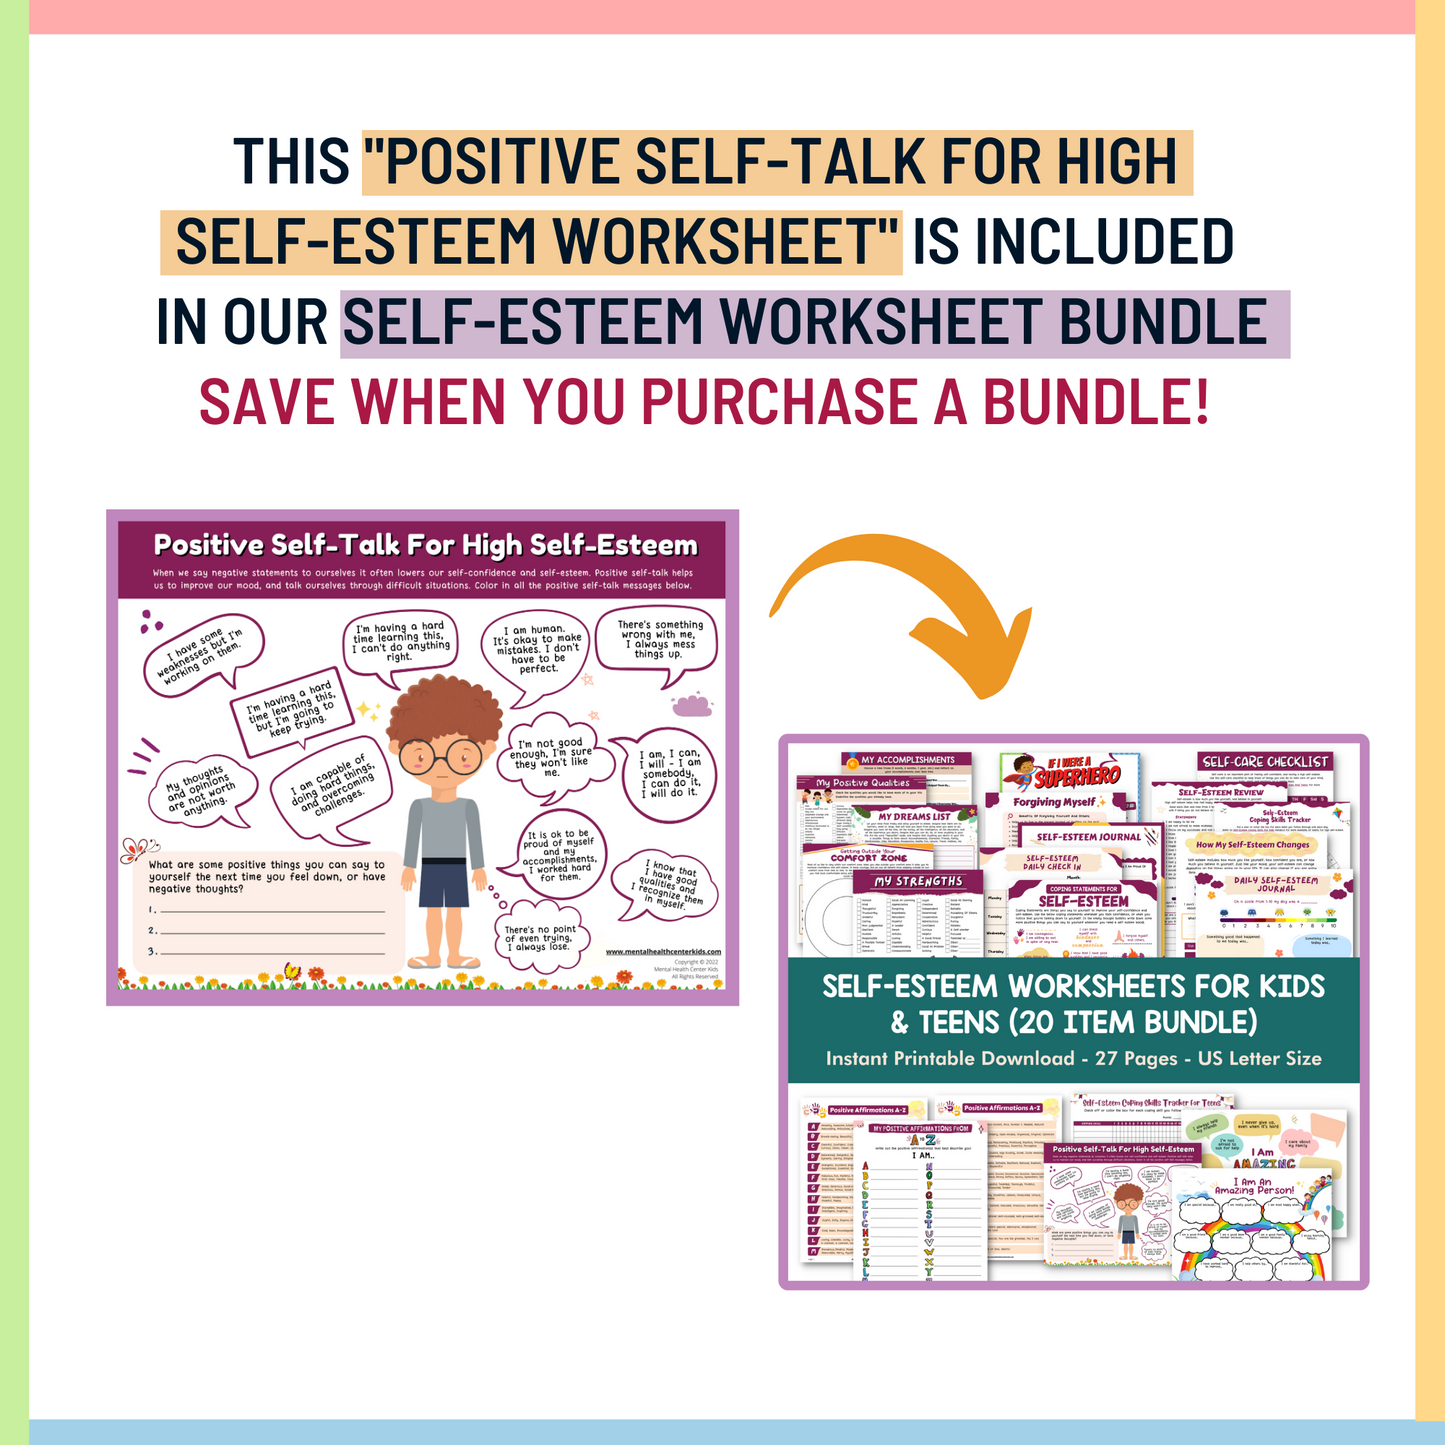 Positive Self-Talk for High Self-Esteem